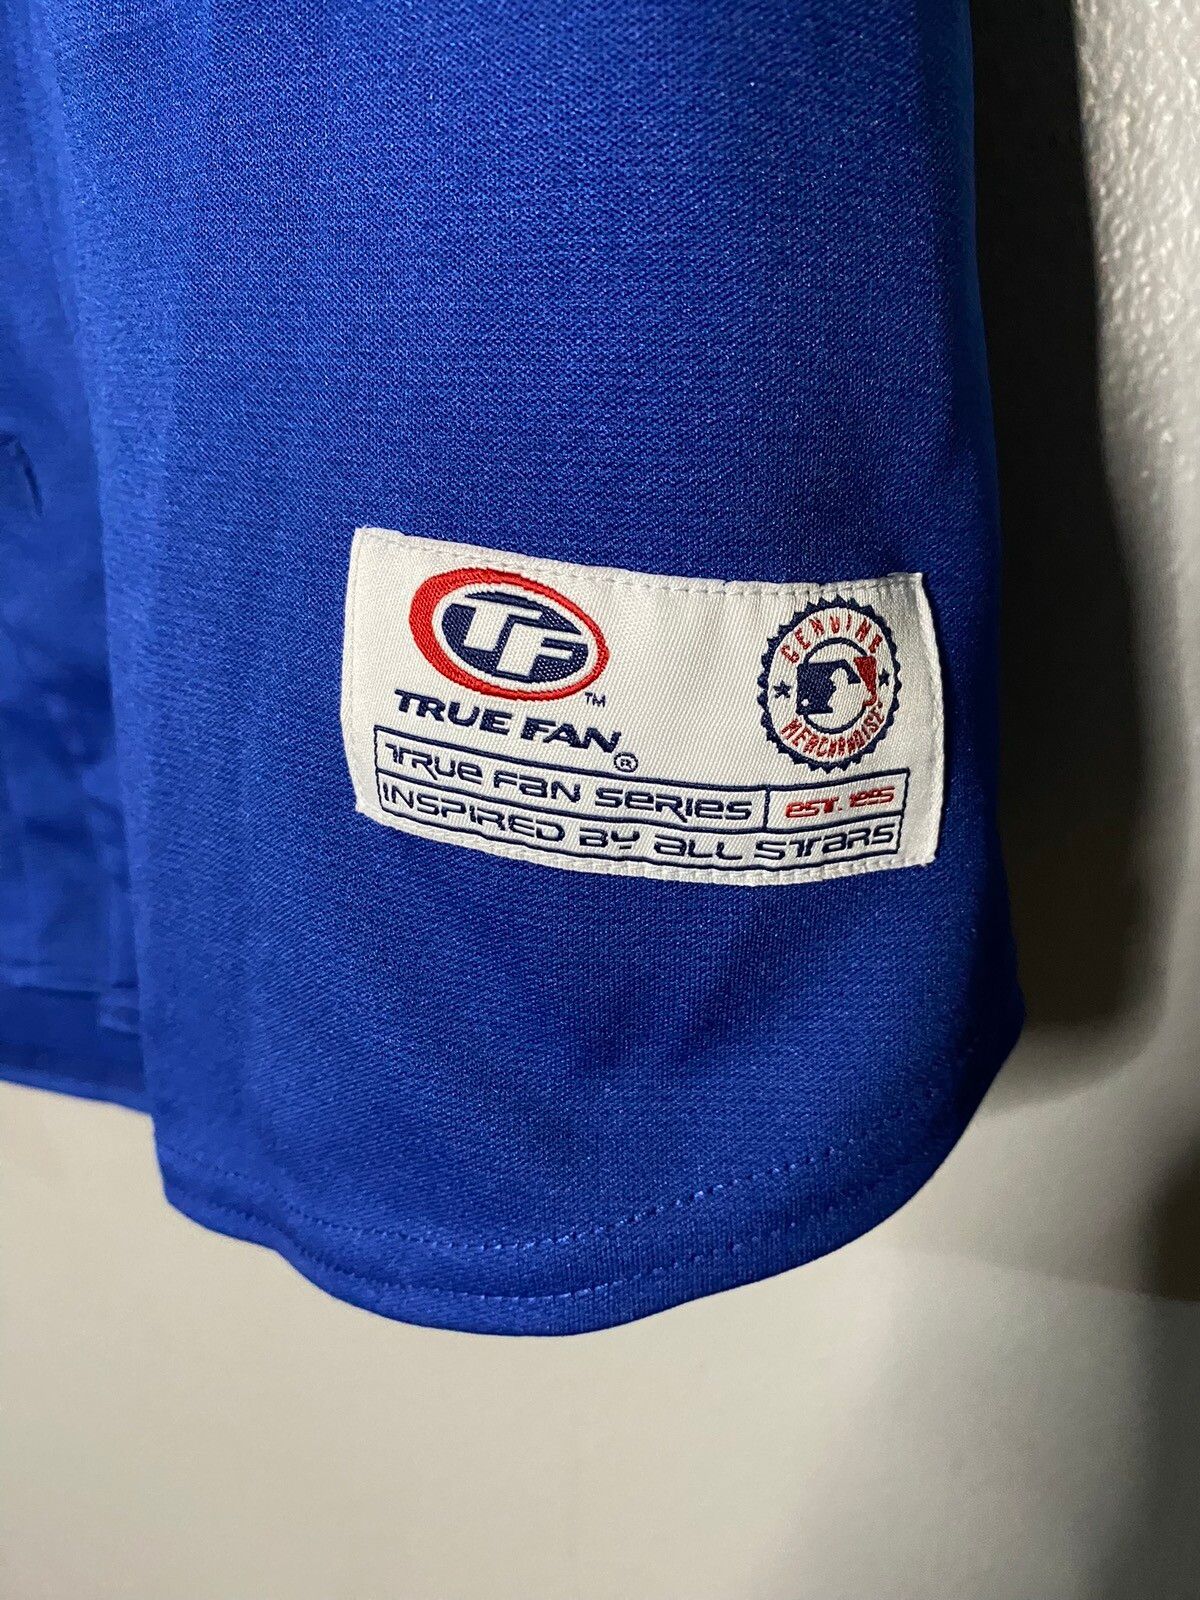 Genuine Merchandise By True Fan Texas Rangers Jersey Stitched Size US XL / EU 56 / 4 - 4 Thumbnail